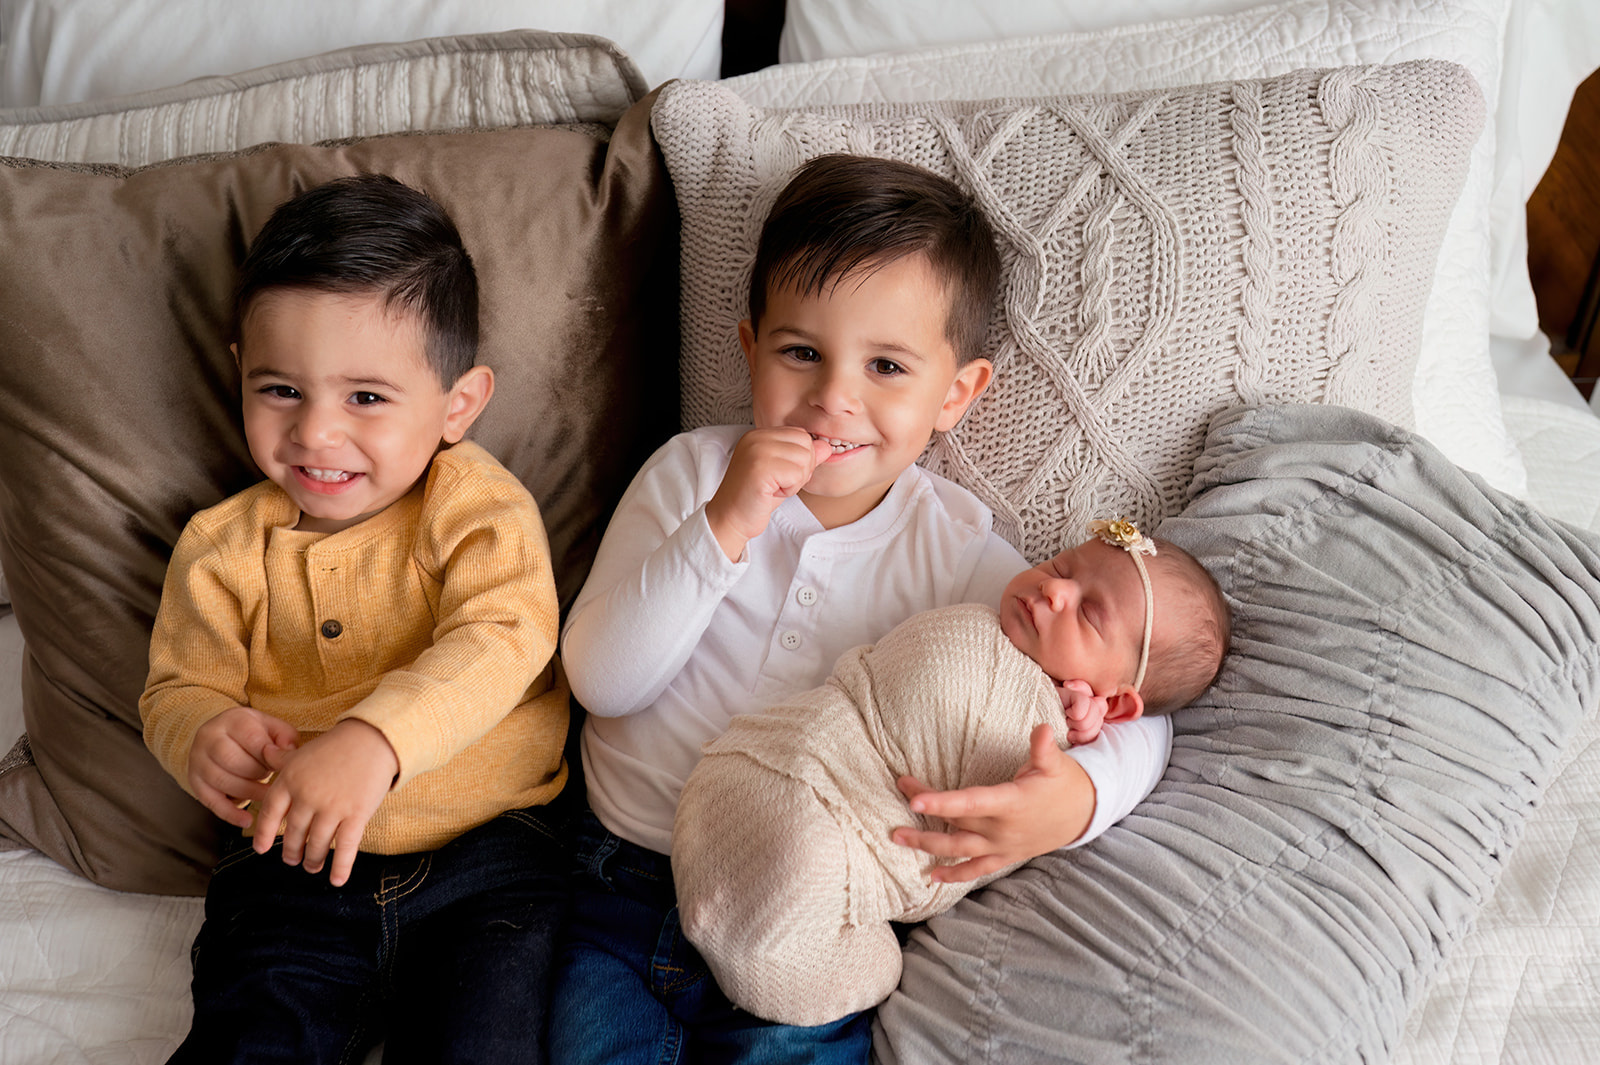 newborn baby girl being held older brothers in loveland photography studio bedroom set